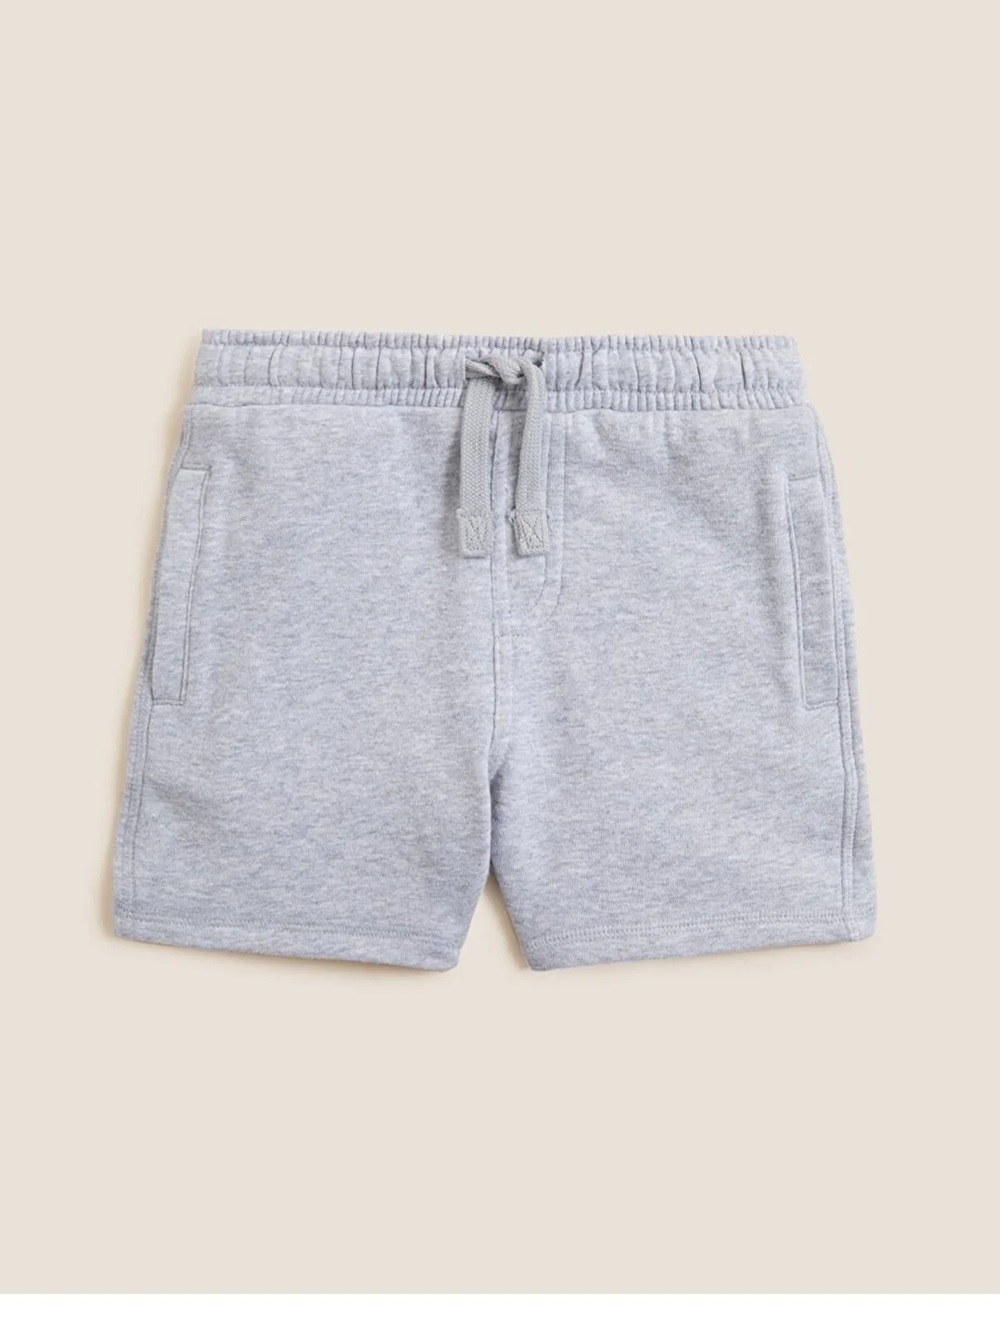 Marks & Spencer Regular Fit Shorts - Mon Ted - Online Store